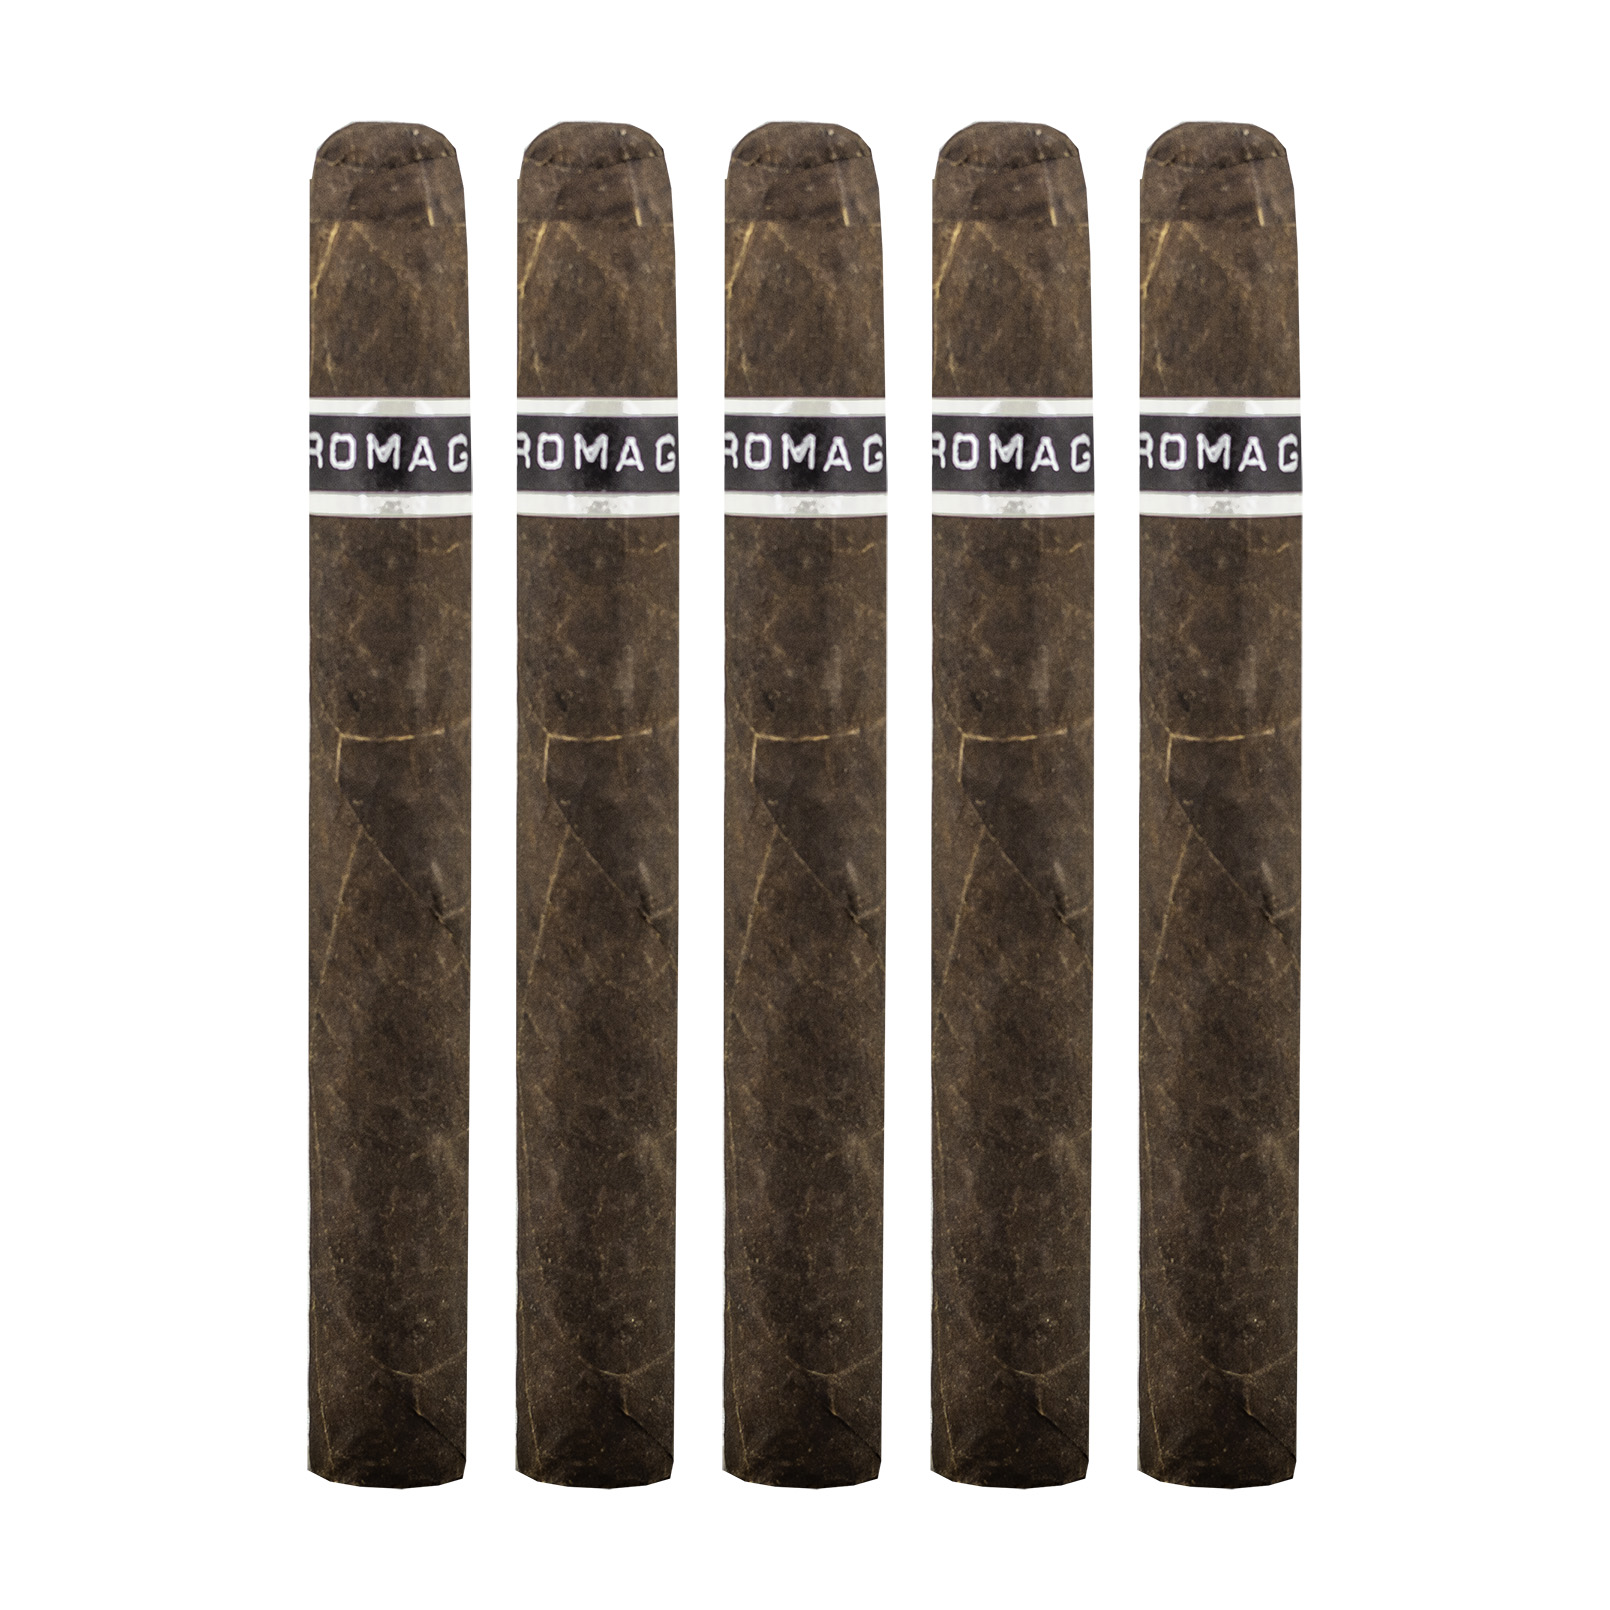 CroMagnon PA Anthropology Cigar - 5 Pack